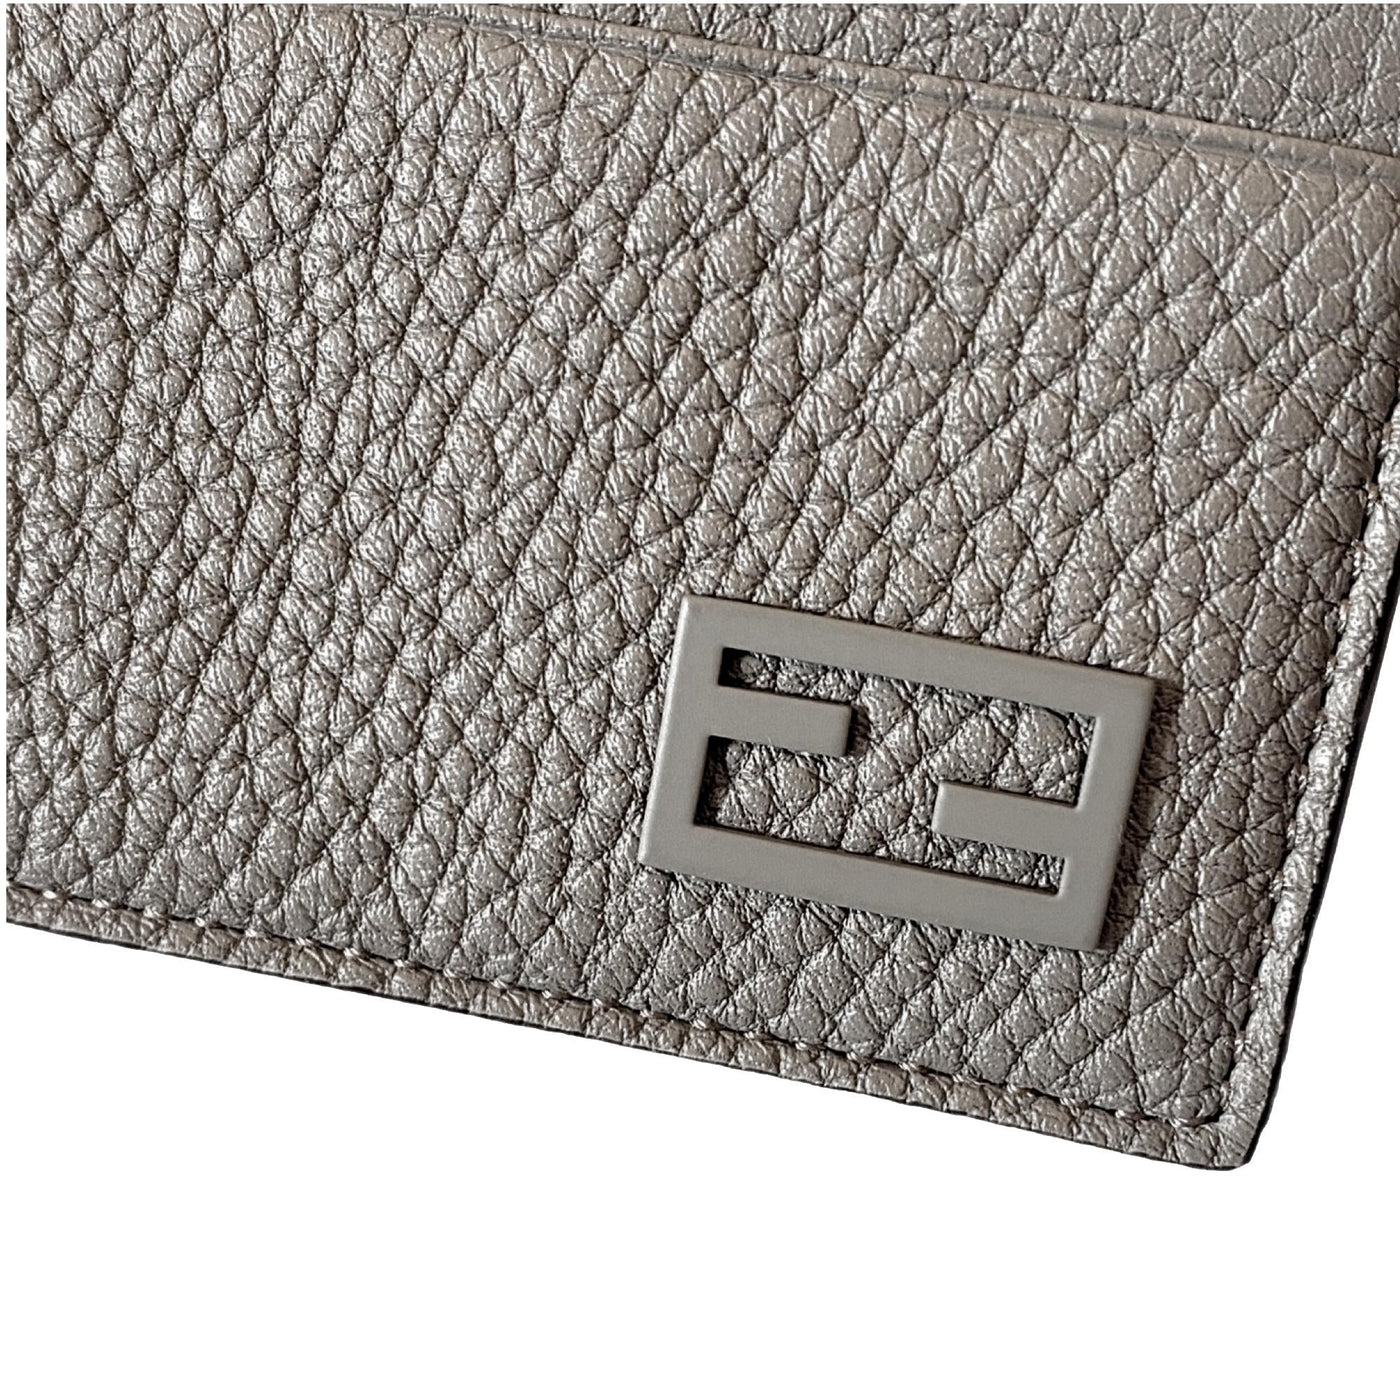 Fendi Baguette Grey and Yellow Grained Leather Card Case Wallet - LUXURYMRKT